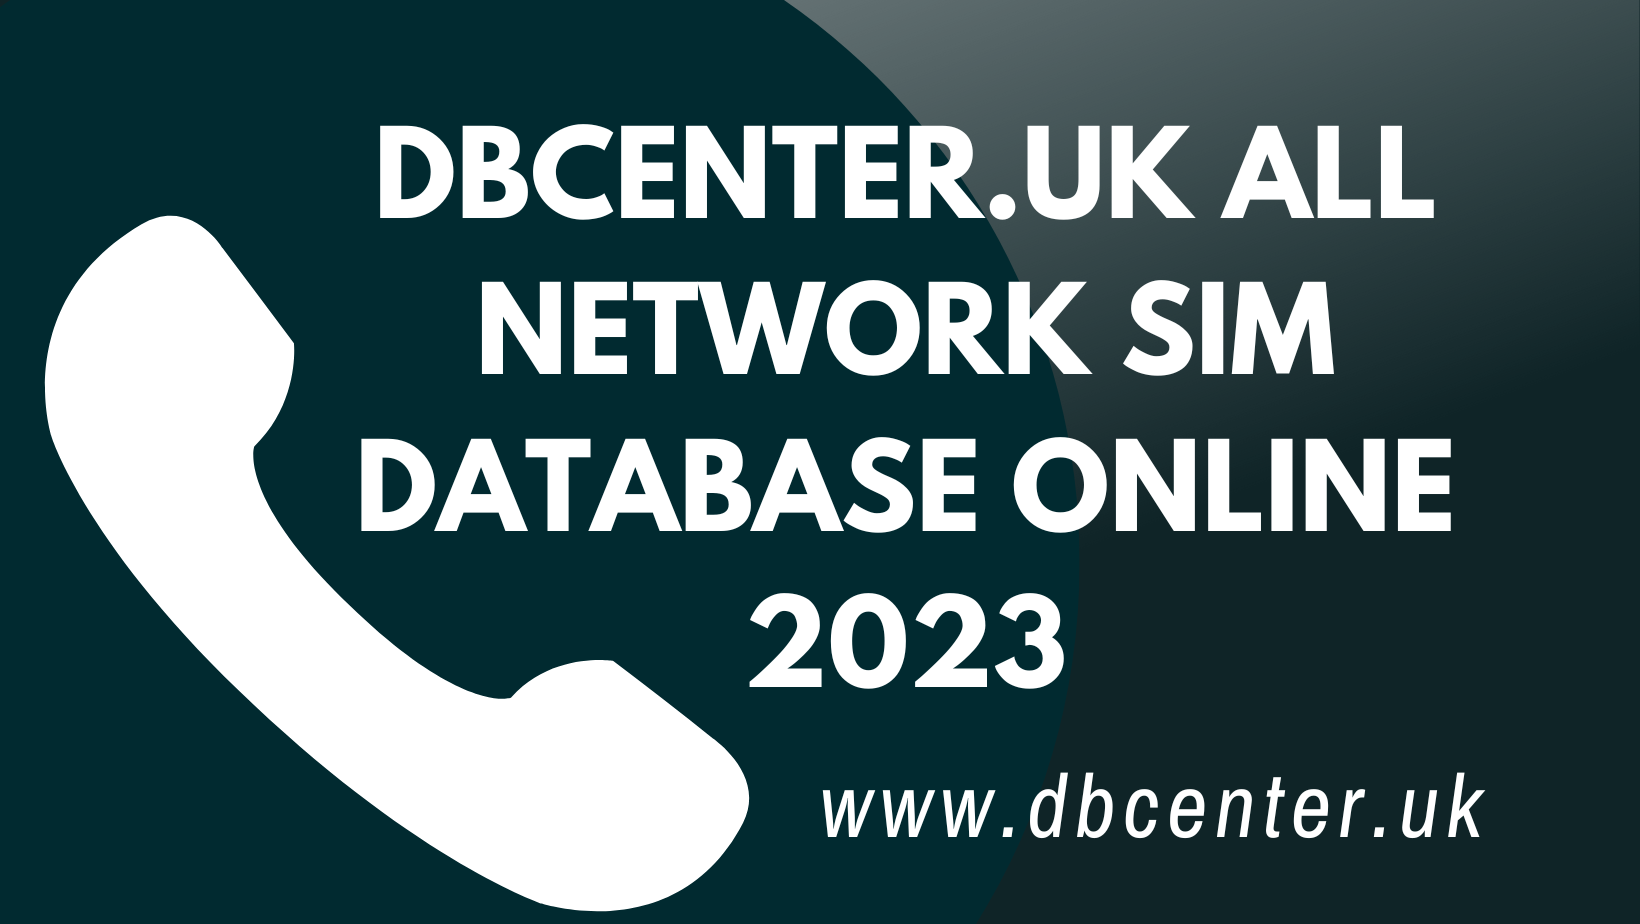 DBCENTER.UK ALL NETWORK SIM DATABASE ONLINE 2023